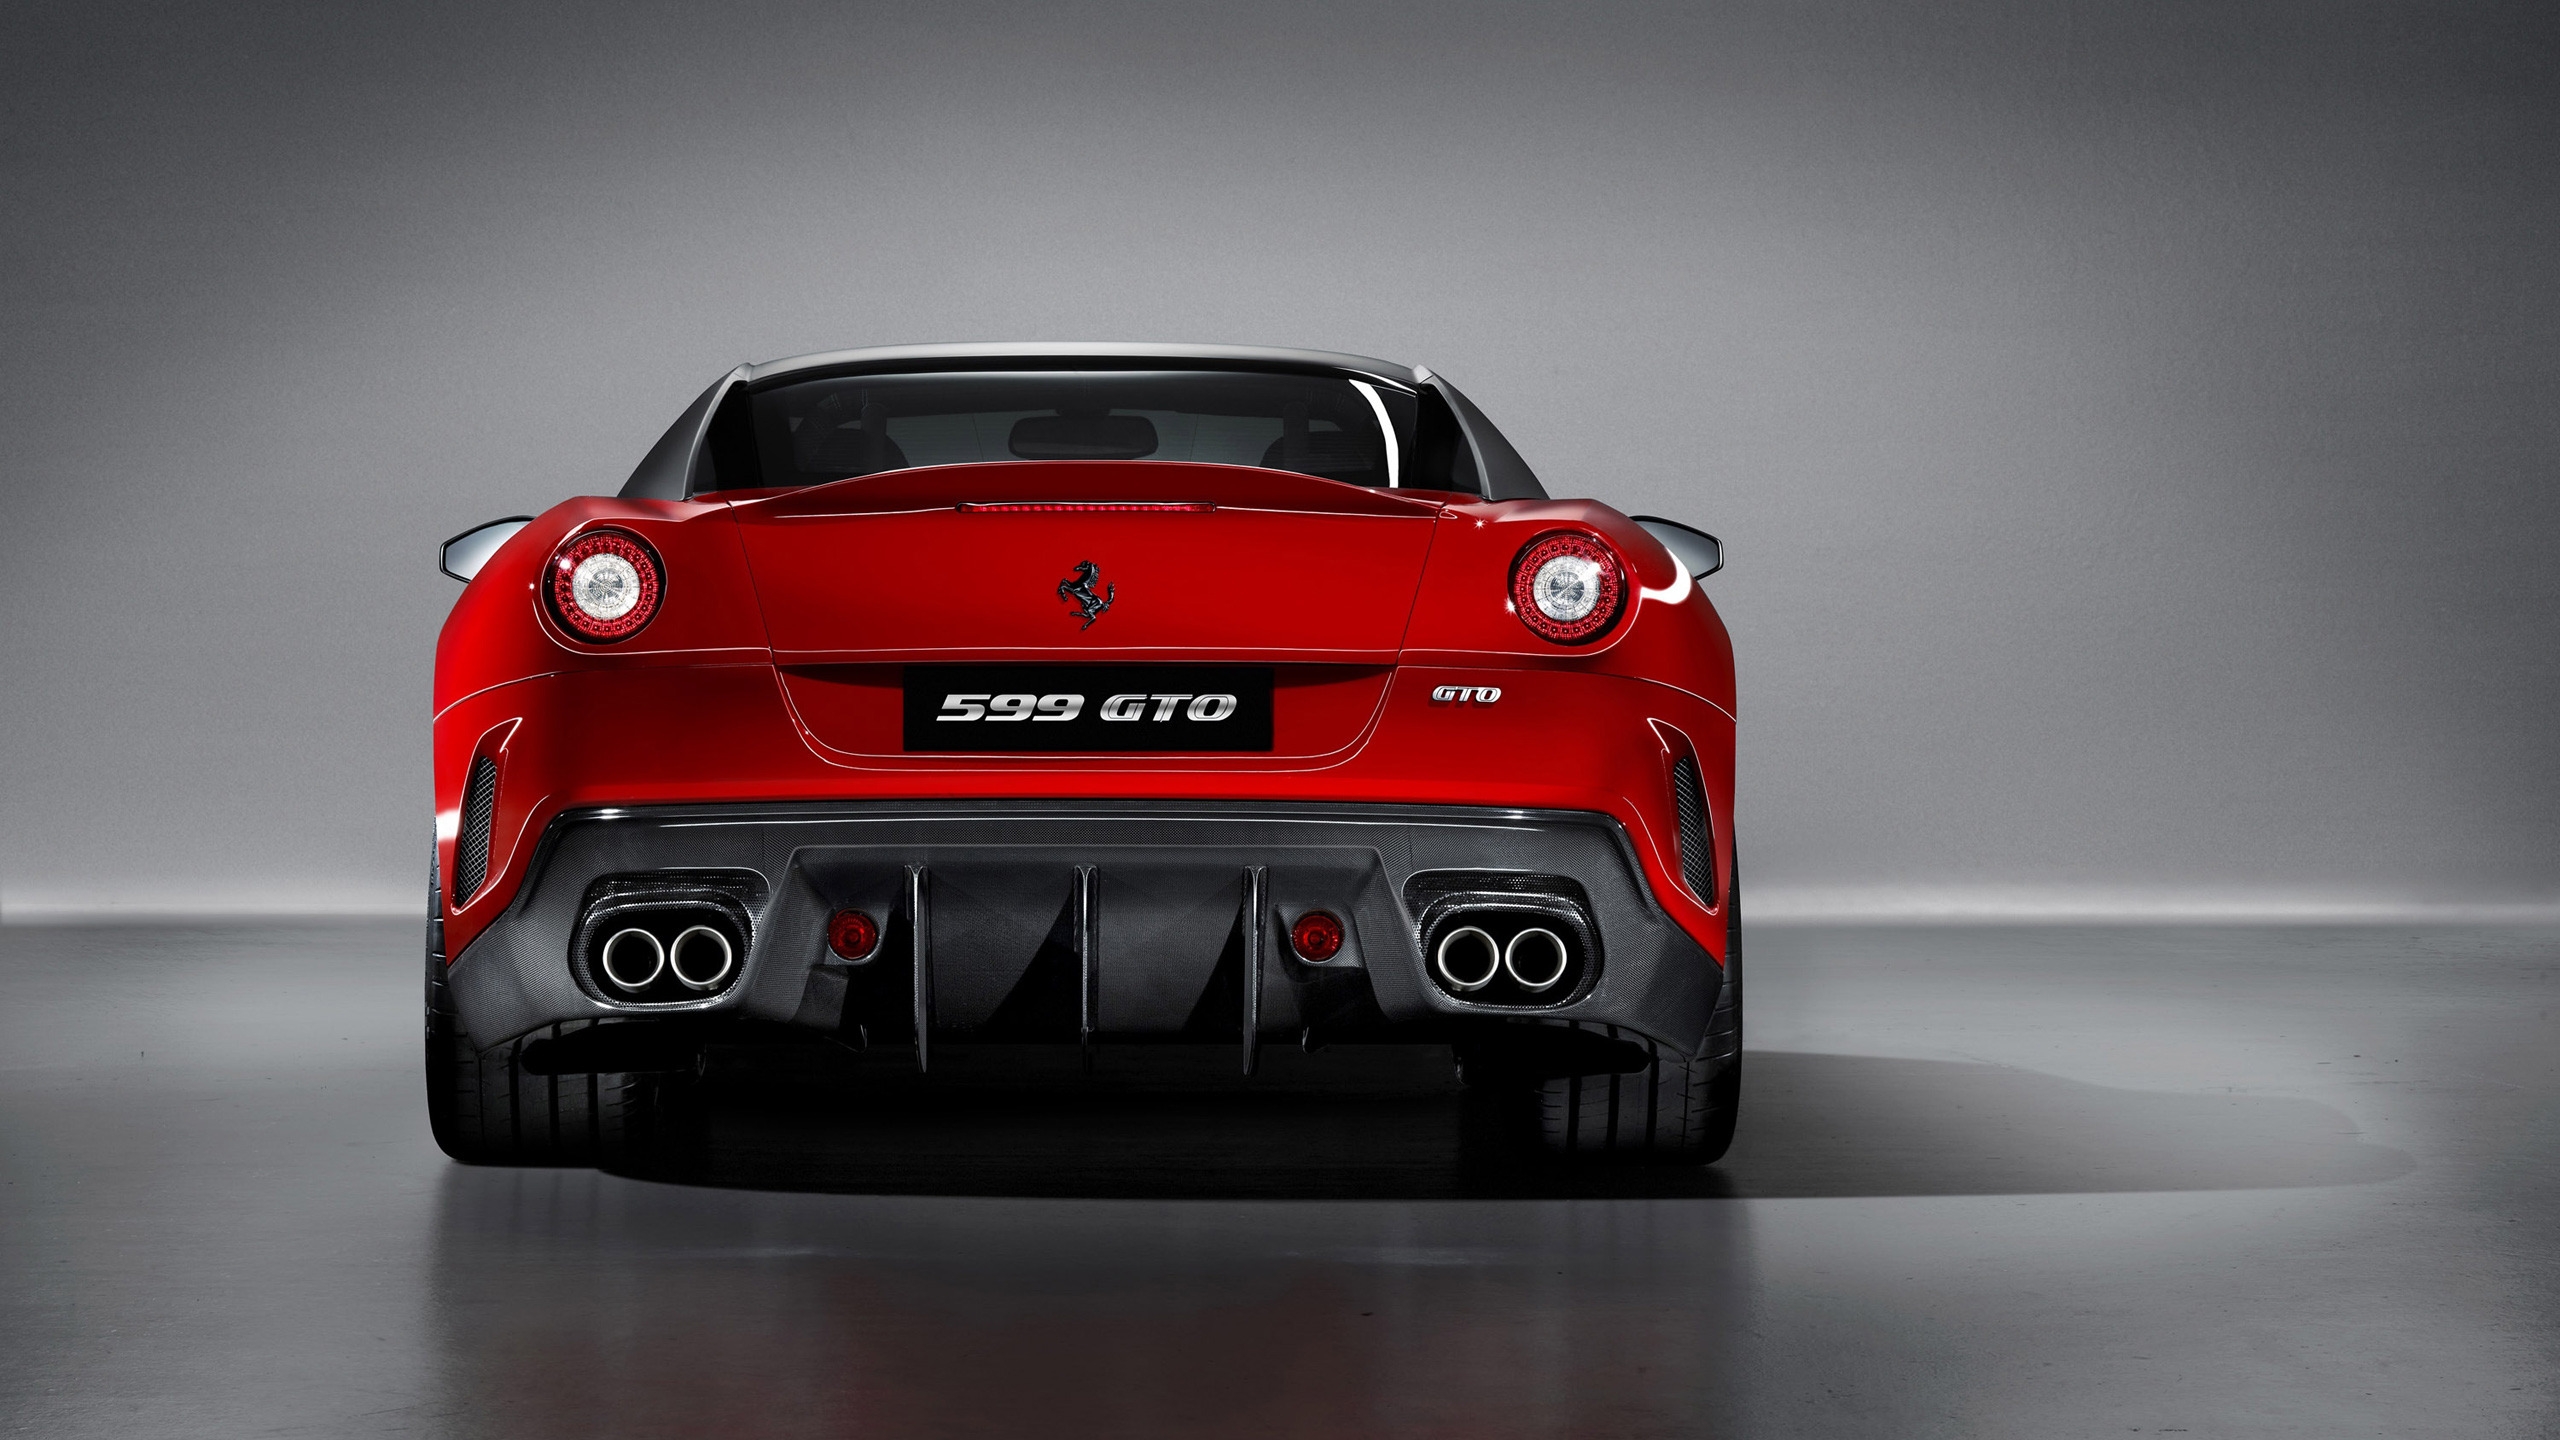 Ferrari 599 GTO Rear for 2560x1440 HDTV resolution